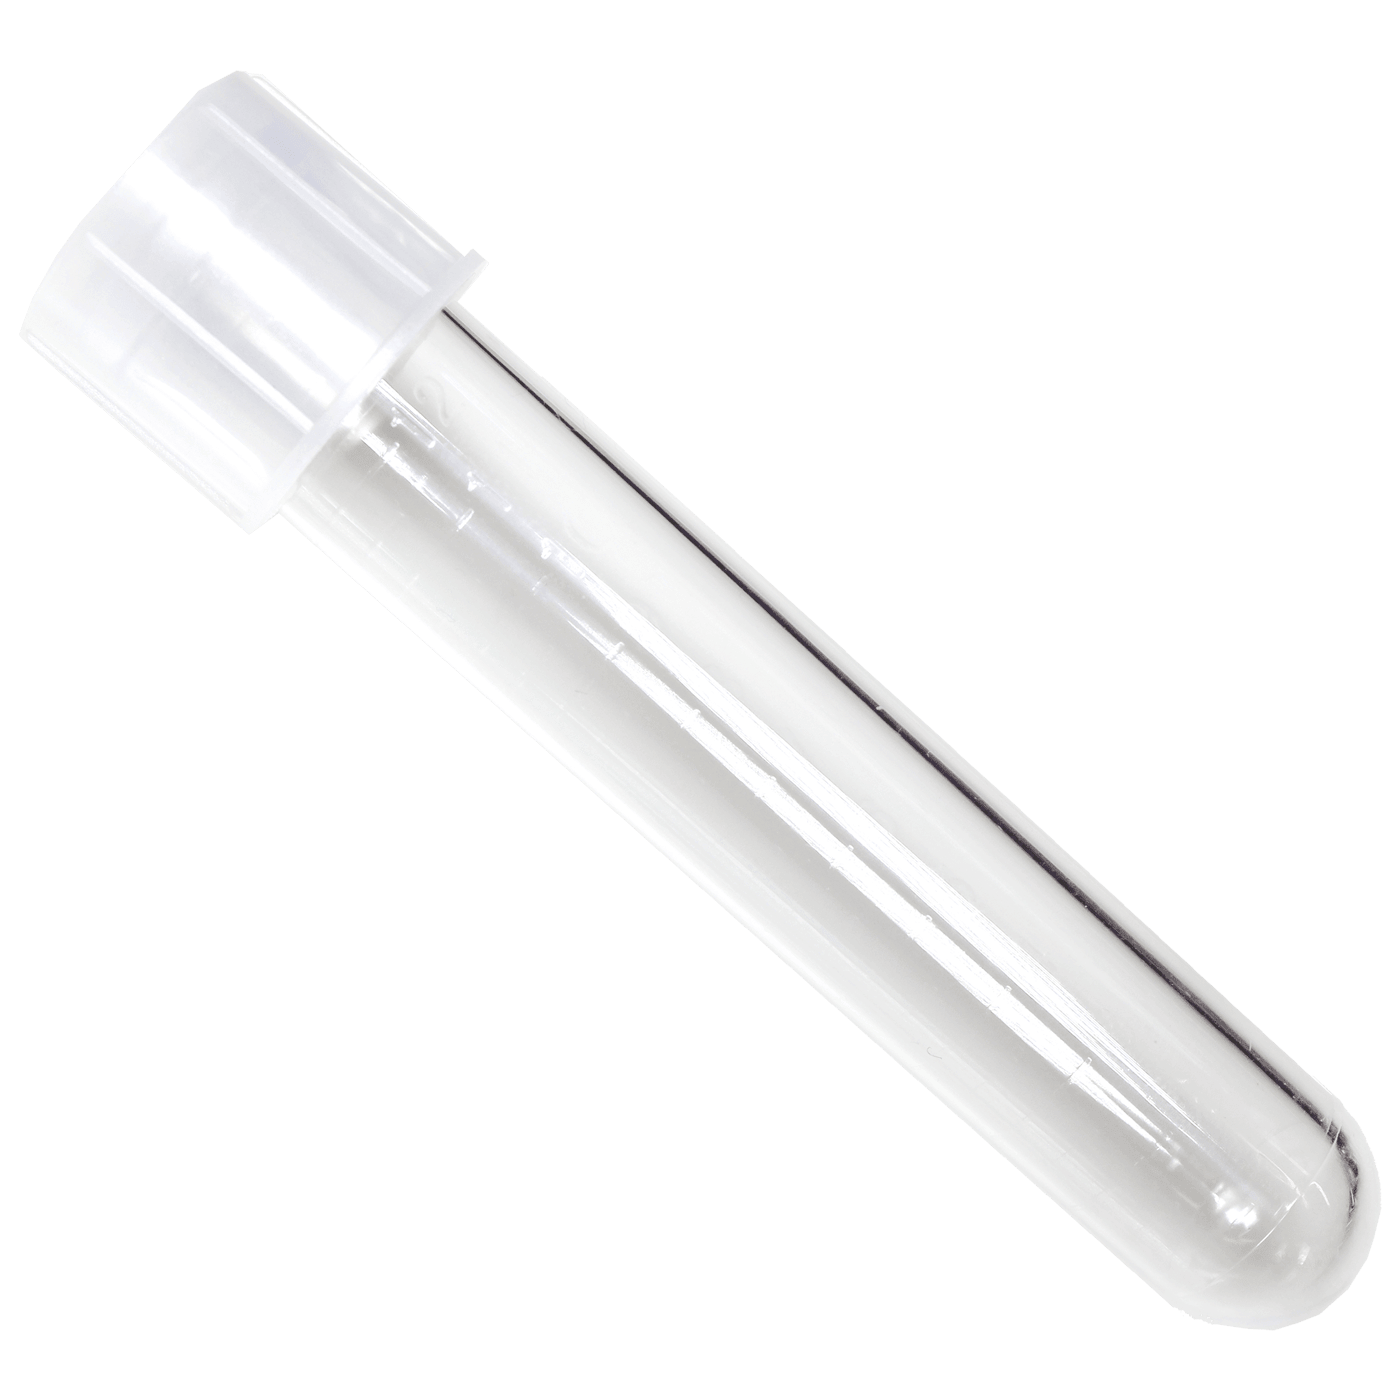 47 Long Liquid Measuring Stick for Liquid Nitrogen (pack of 5)